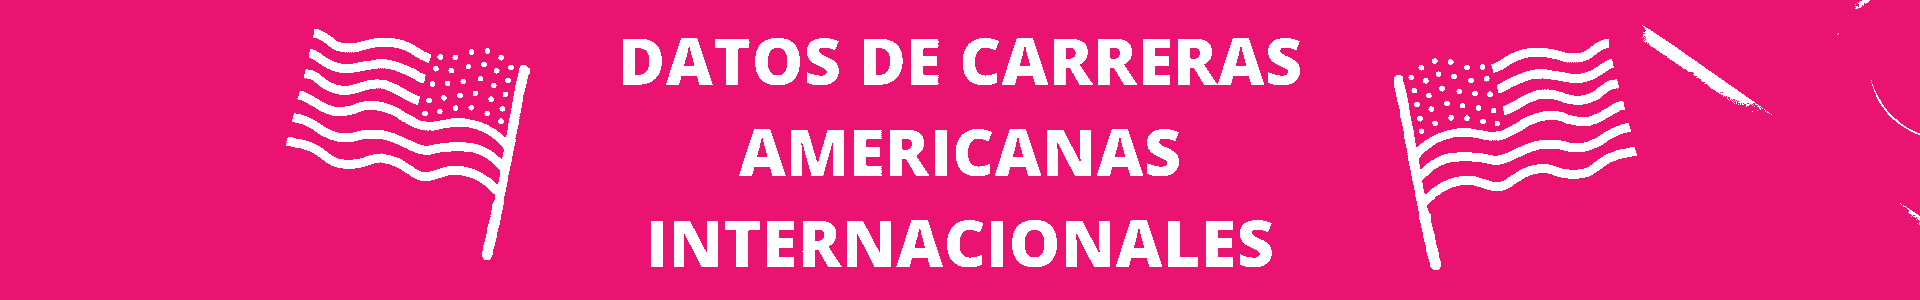 DATOS DE CARRERAS AMERICANAS